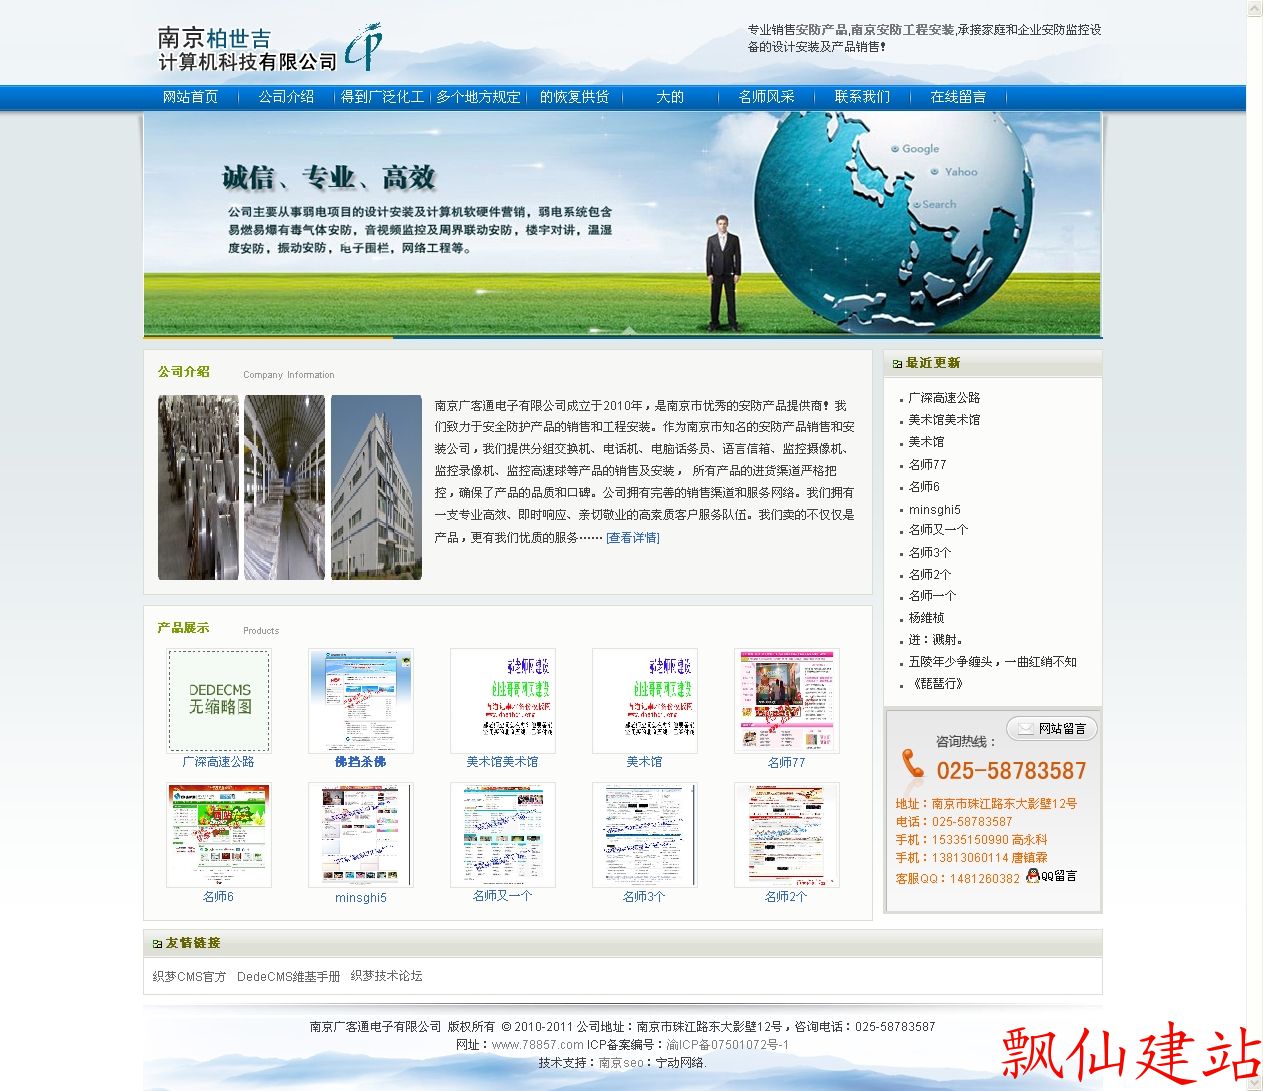 dedecms蓝色企业网站模板仿南京广客通电子有限公司工网站.jpg